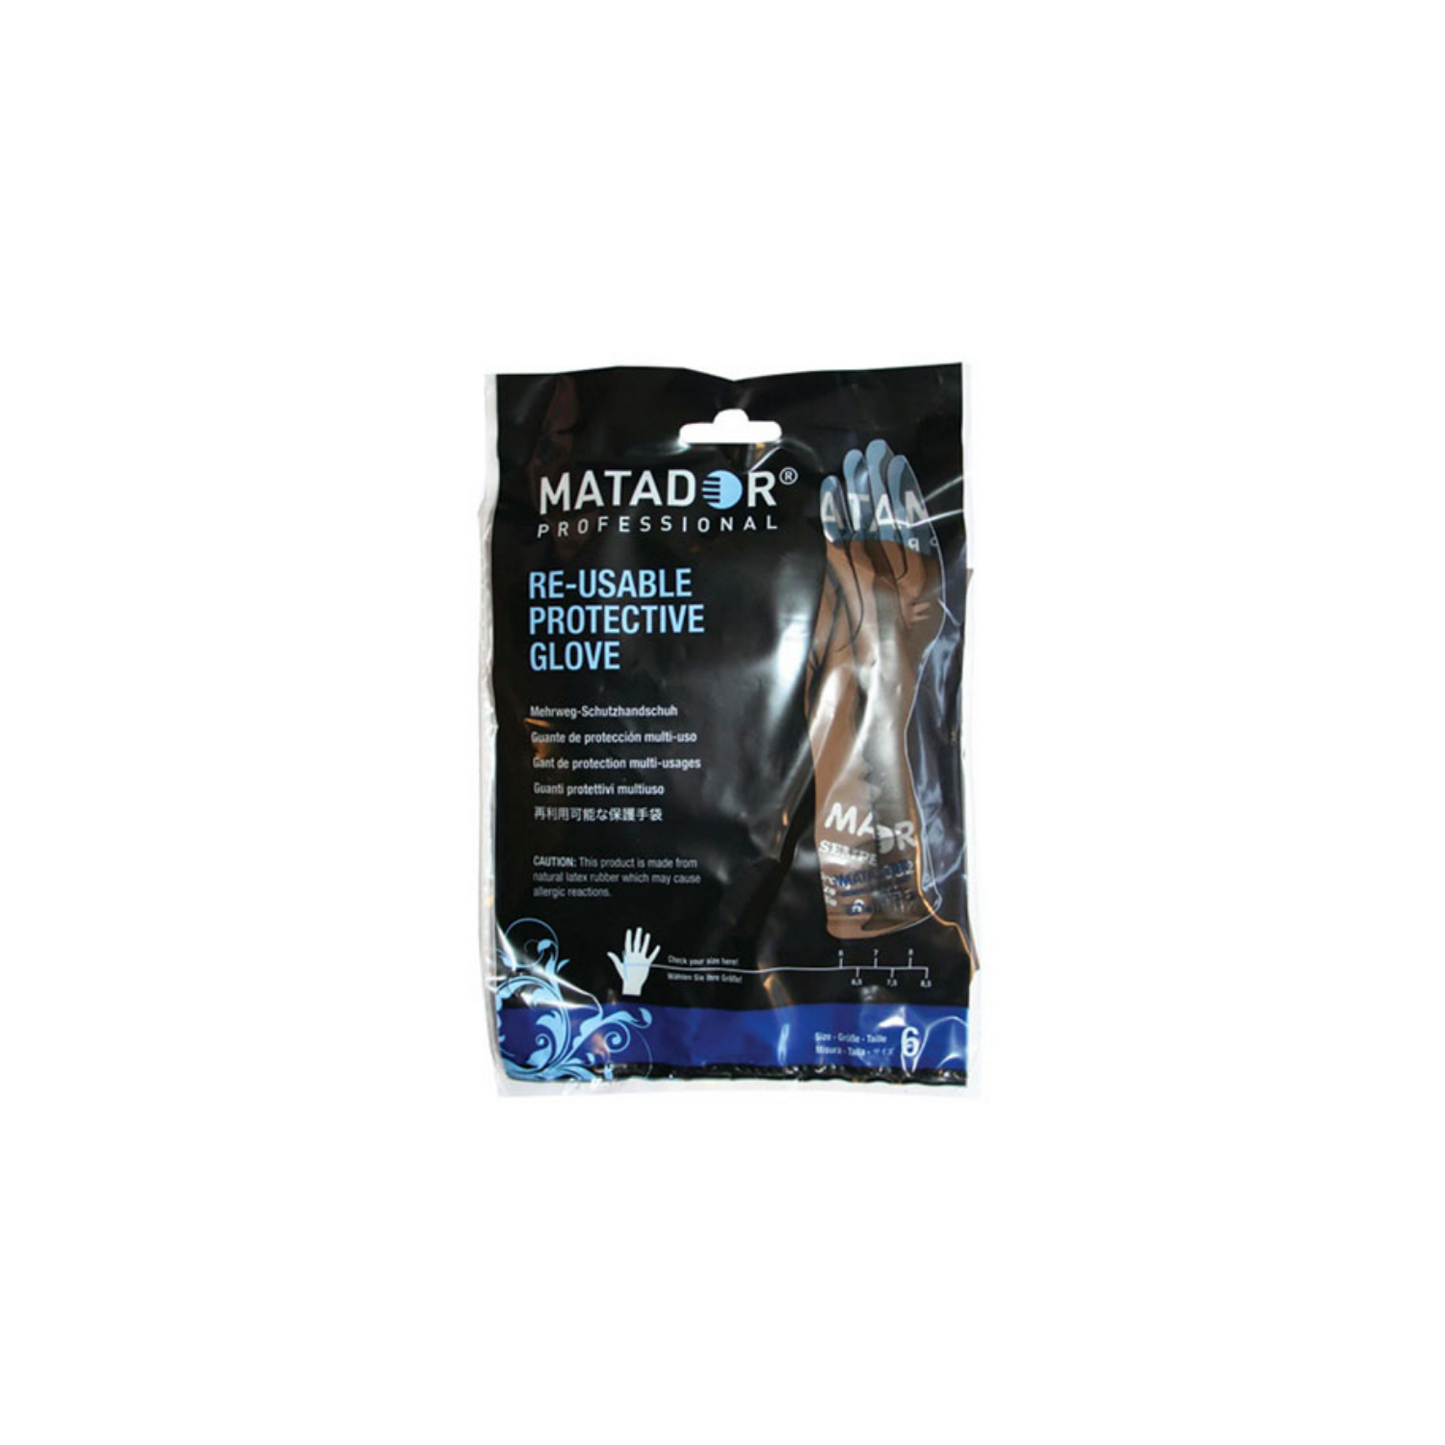 Matador Professional Re-Usable Protective Gloves - Size 6.5